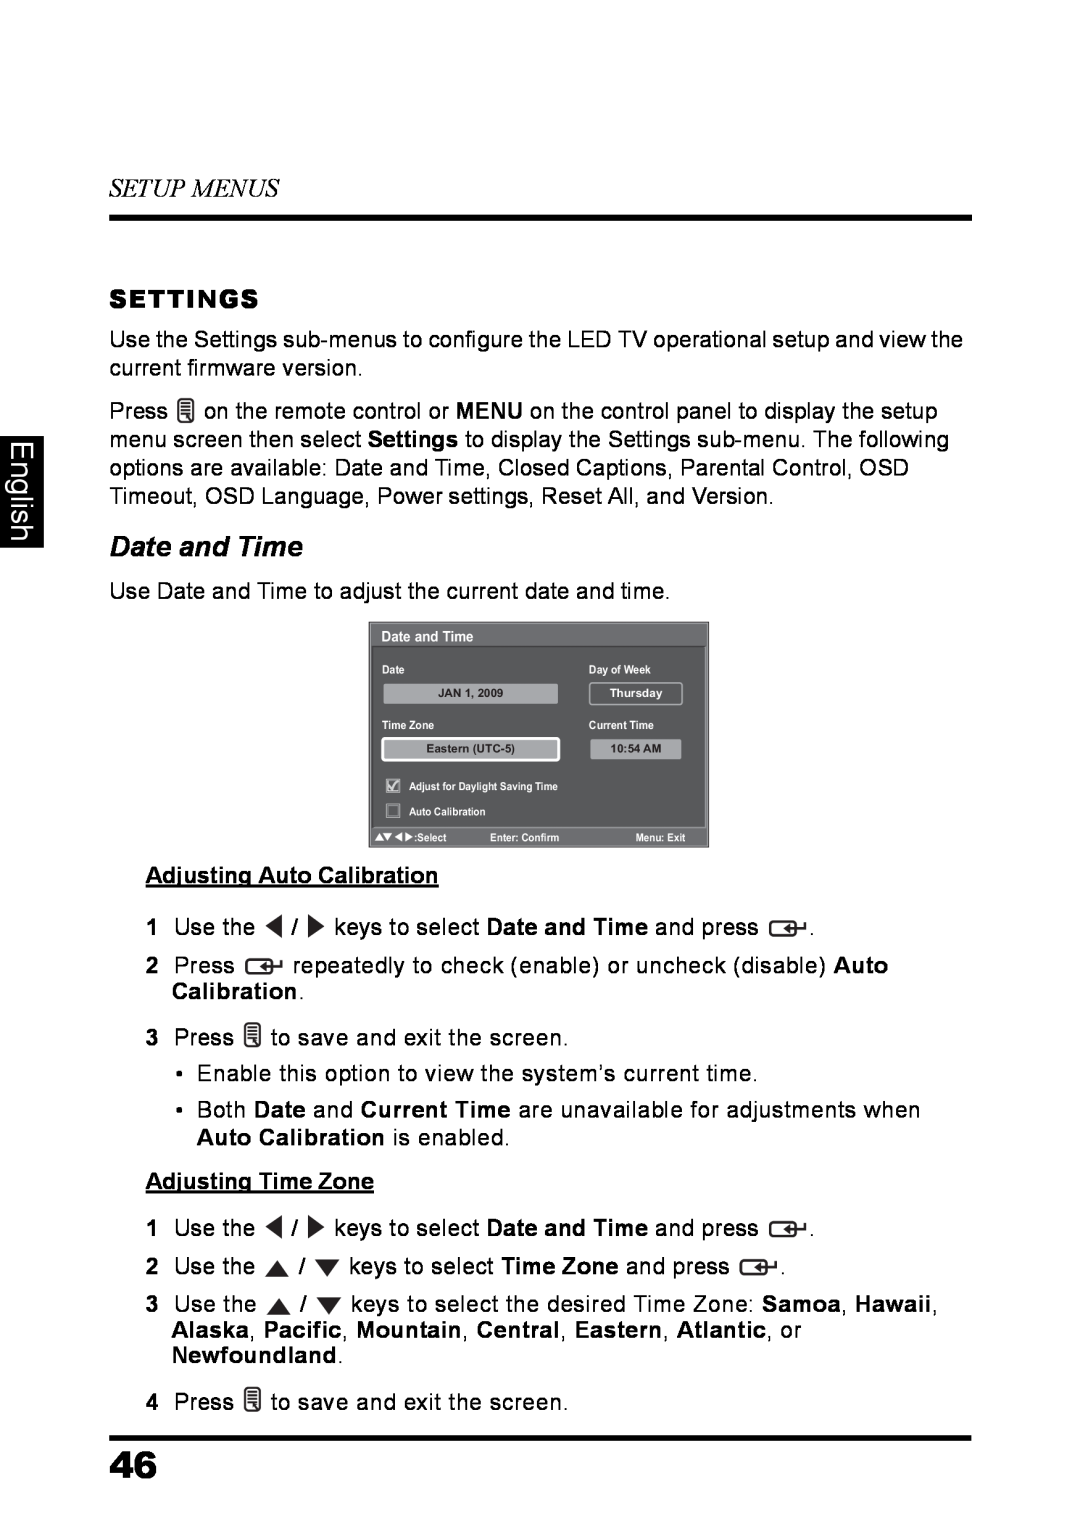 Westinghouse LD-3237 user manual Date and Time, English, Setup Menus, Settings 